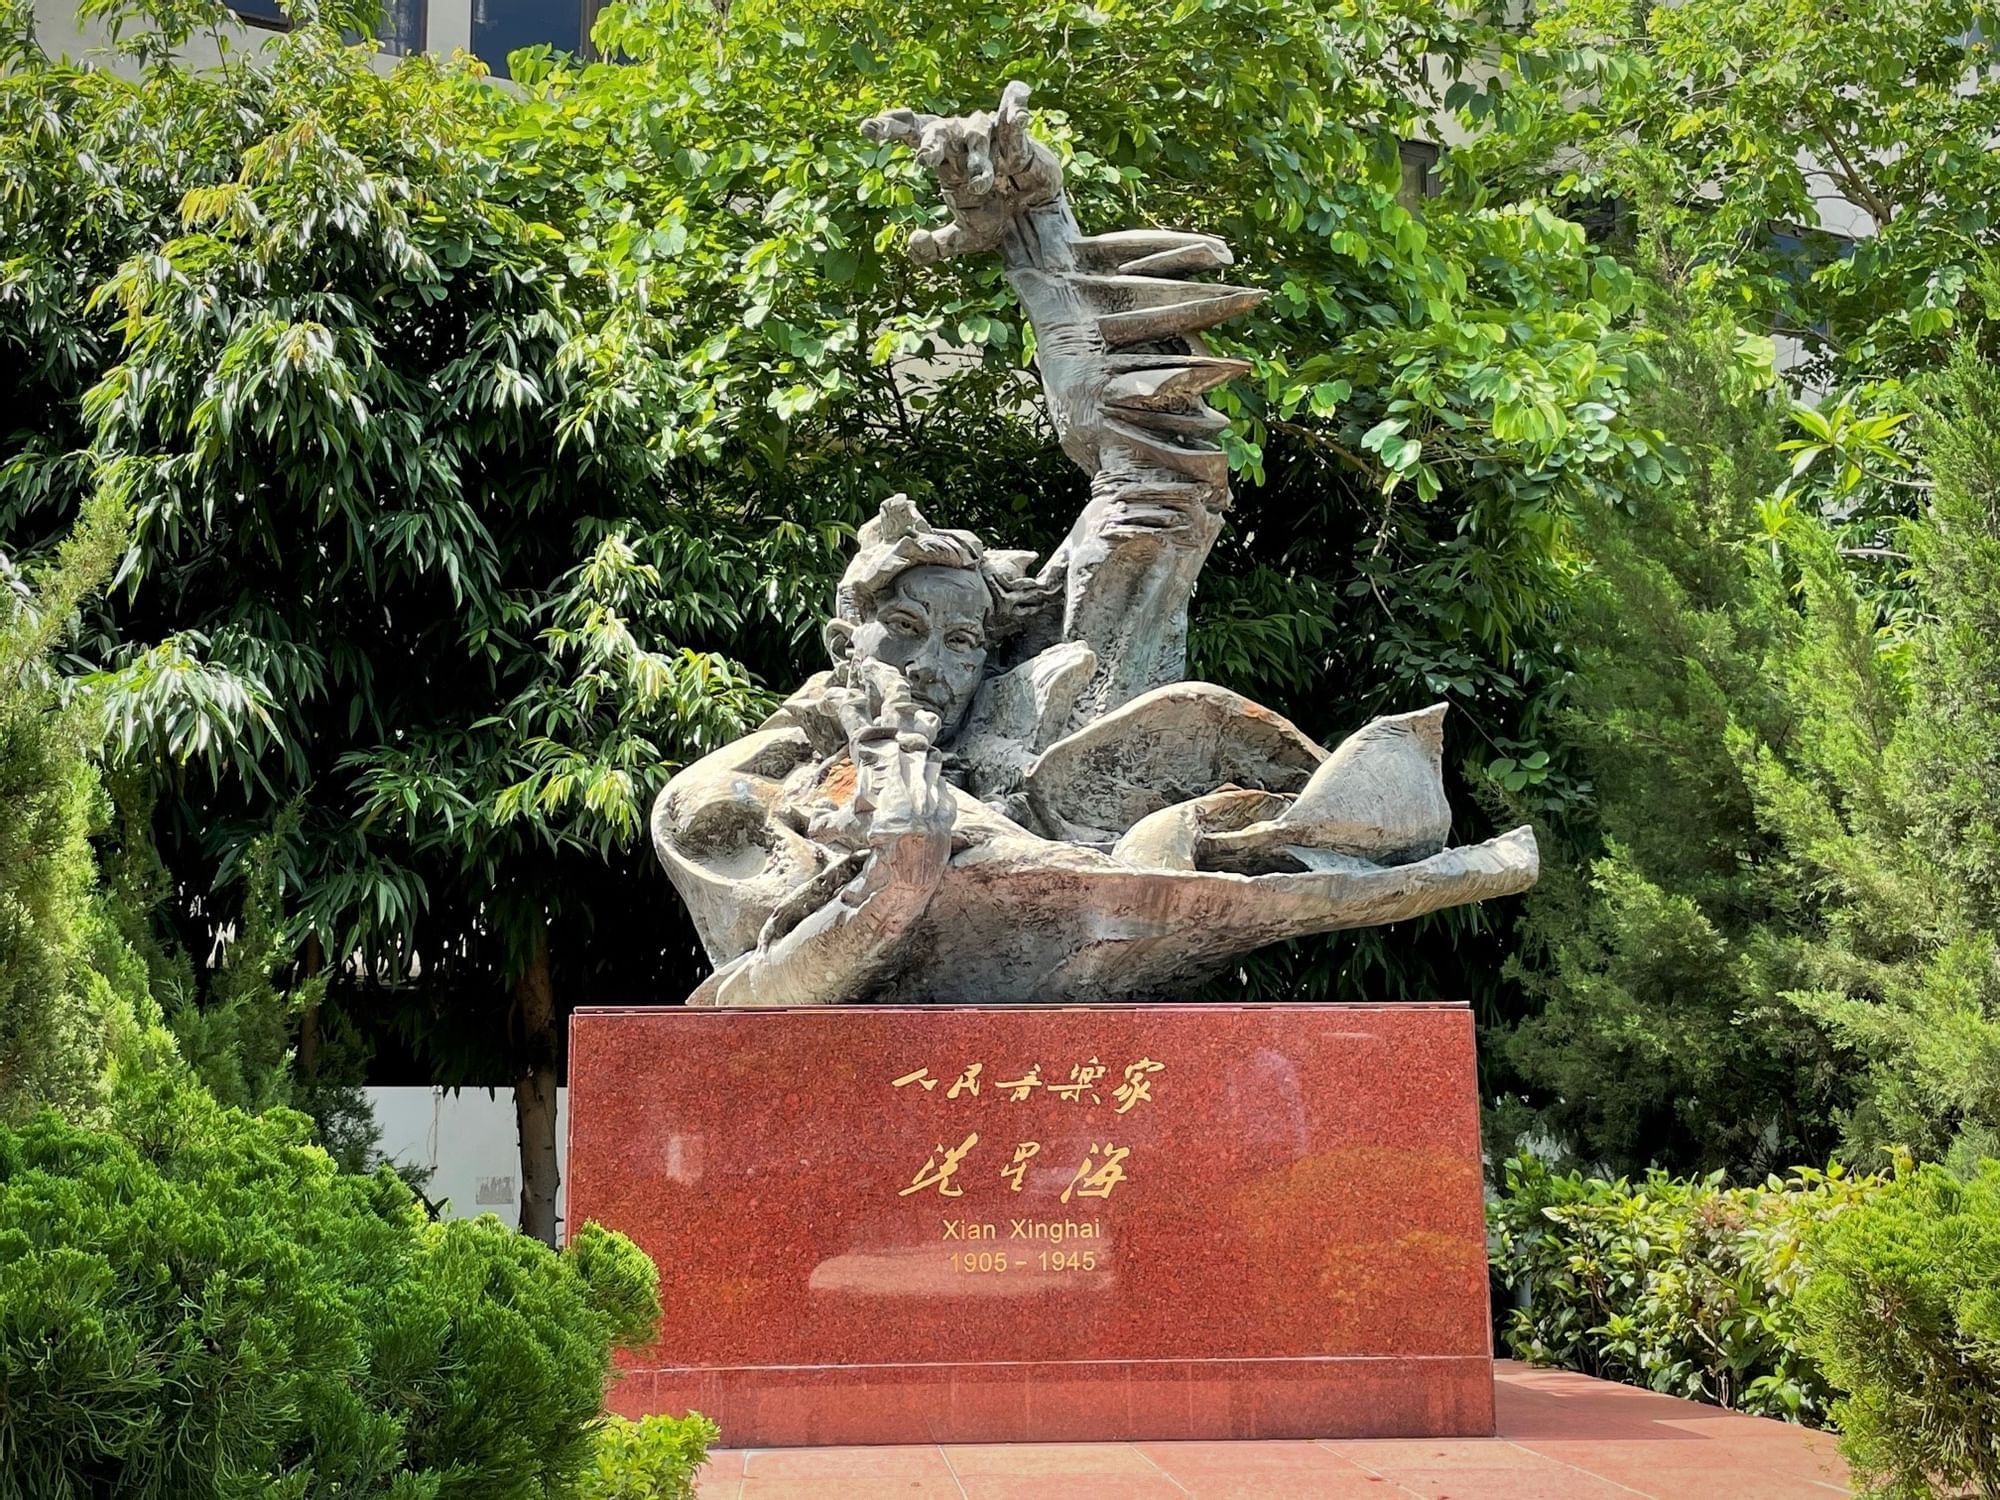 Close-up of The Statue of Xian Xinghai at Artyzen Grand Lapa